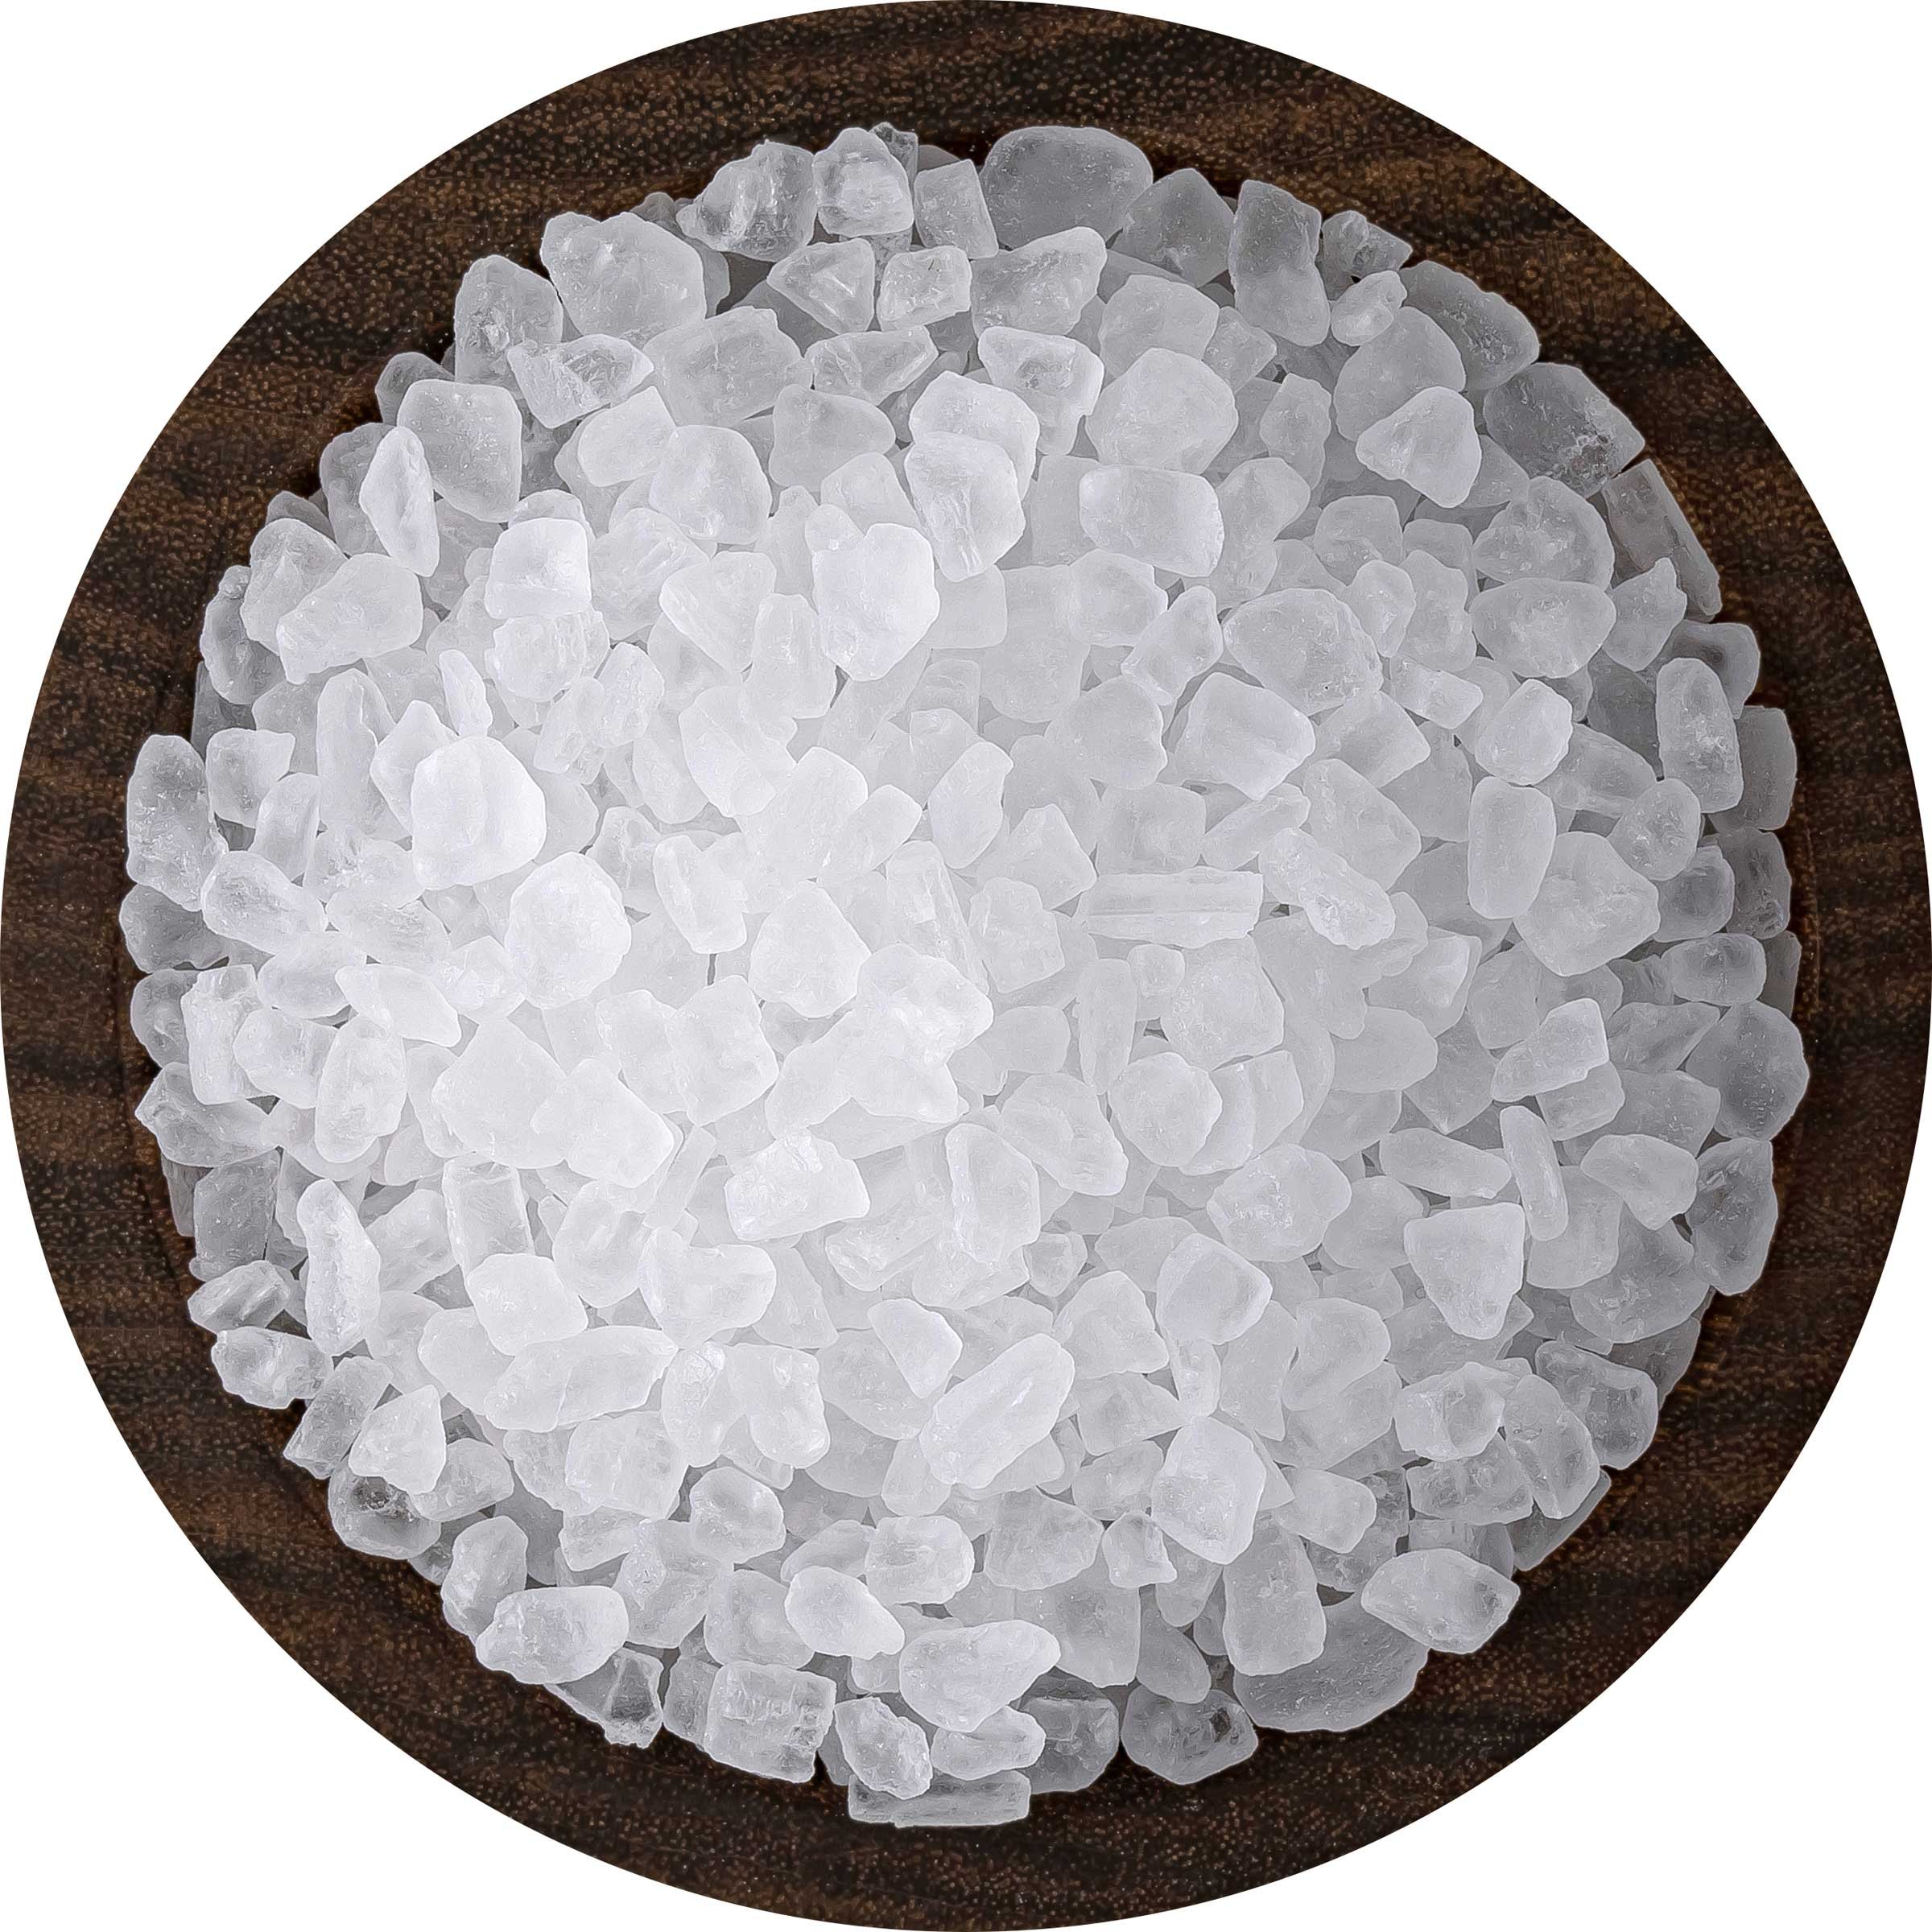 Pure Ocean® Sea Salt Bulk (Coarse Grain) - 55 lb Bag